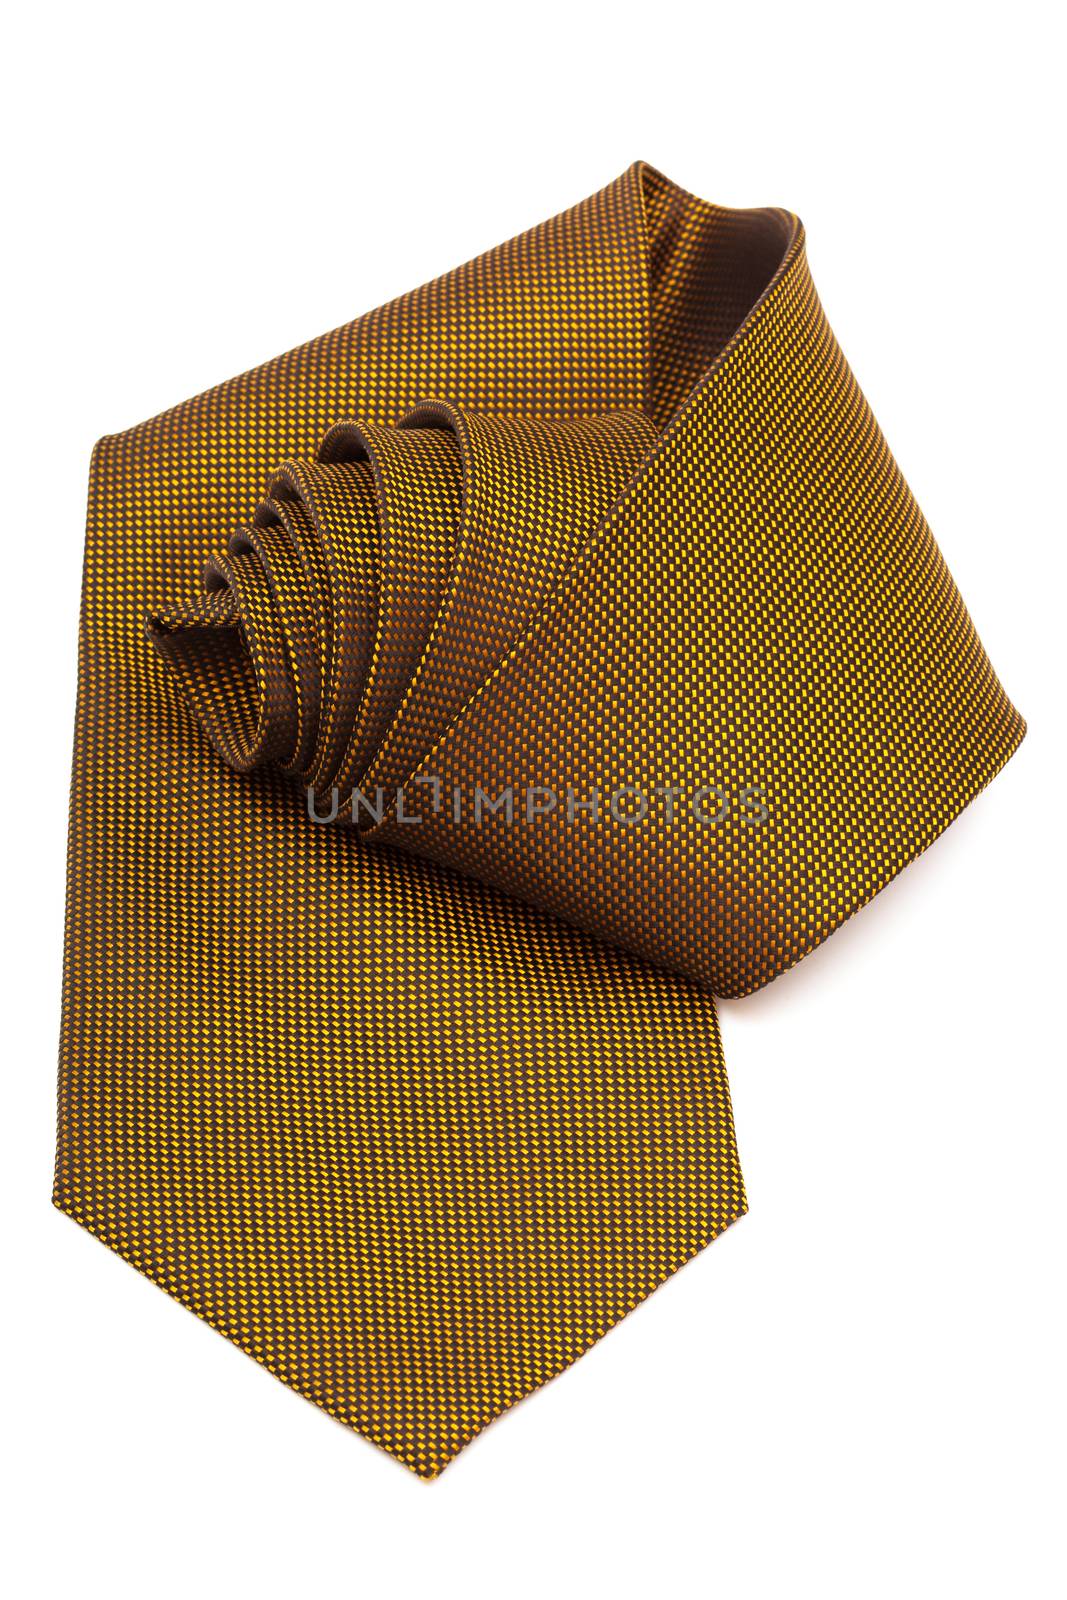 yellow necktie by terex